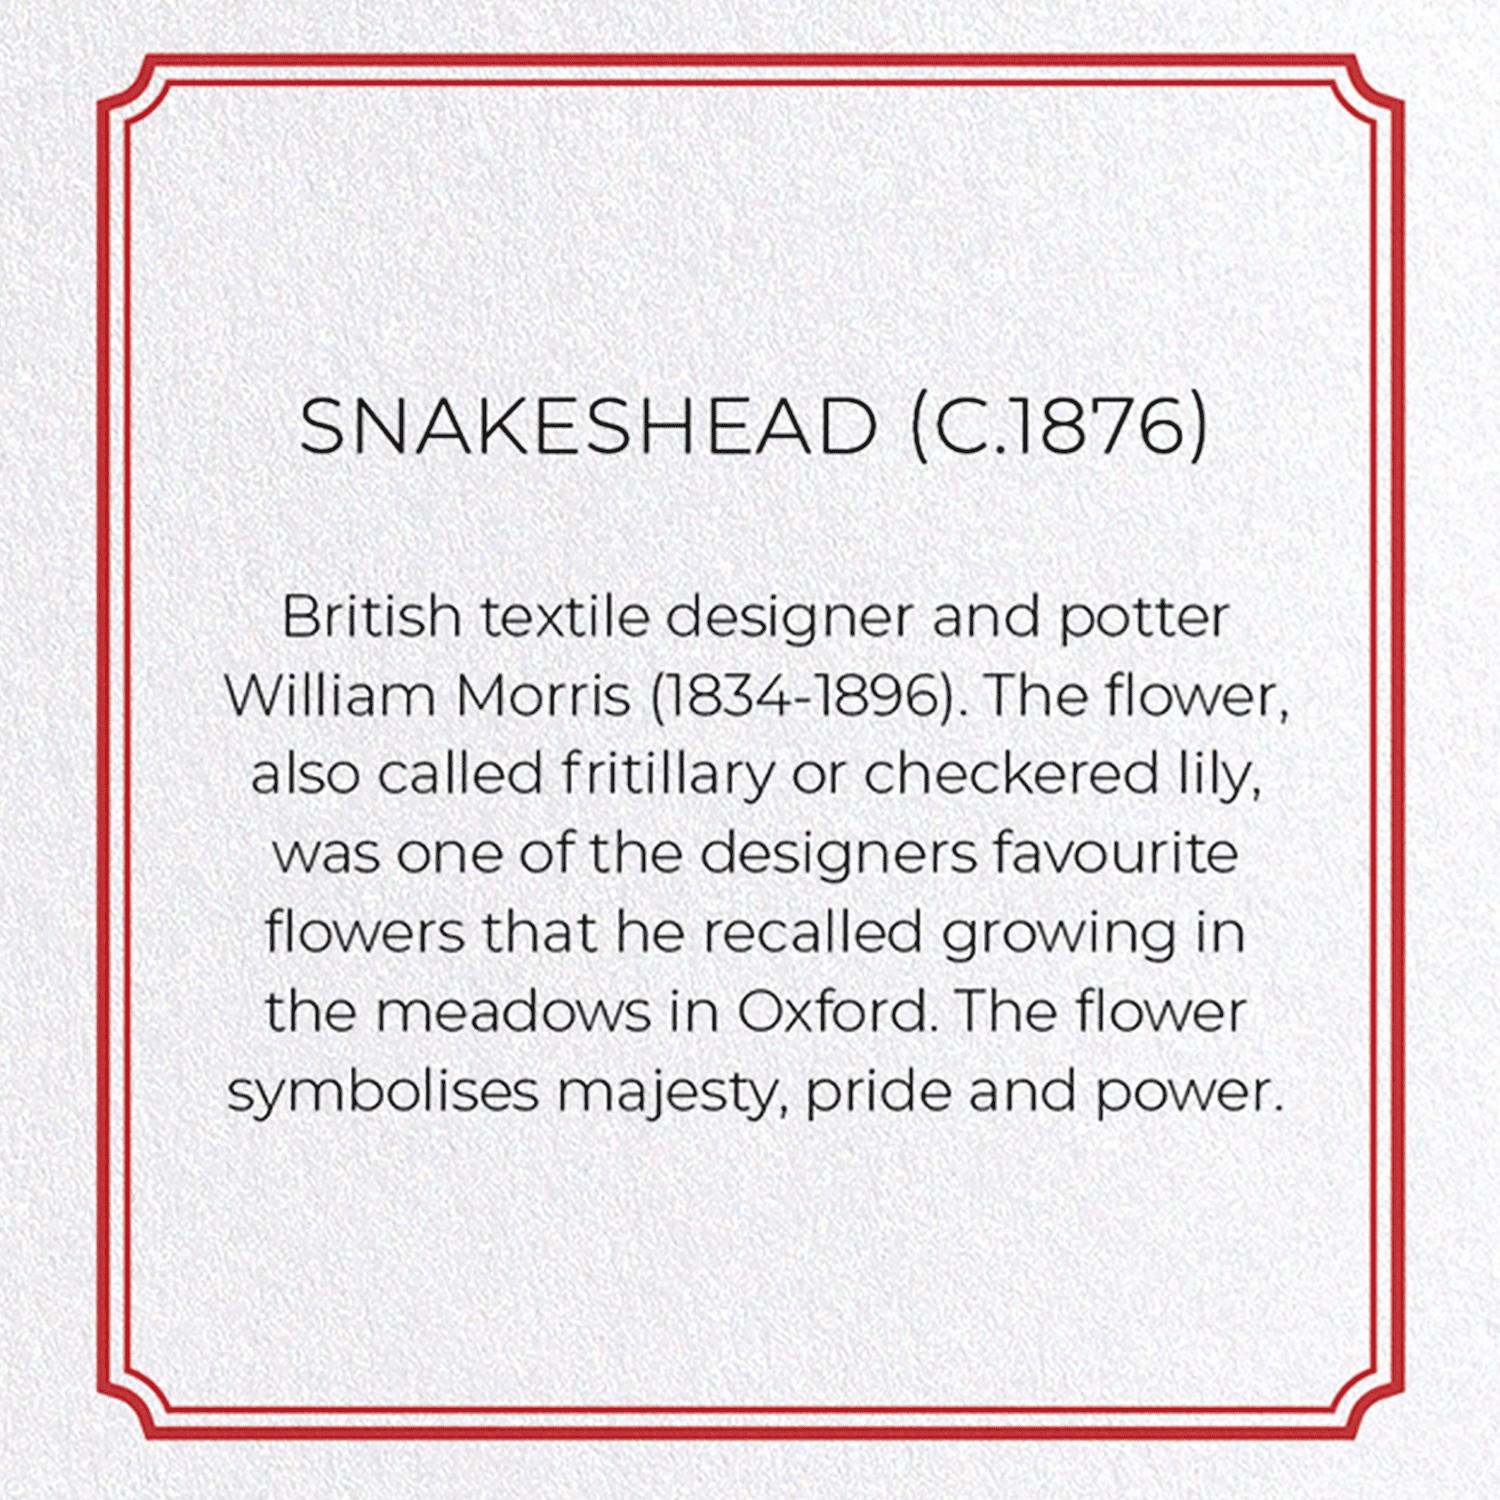 SNAKESHEAD (C.1876): Pattern Greeting Card